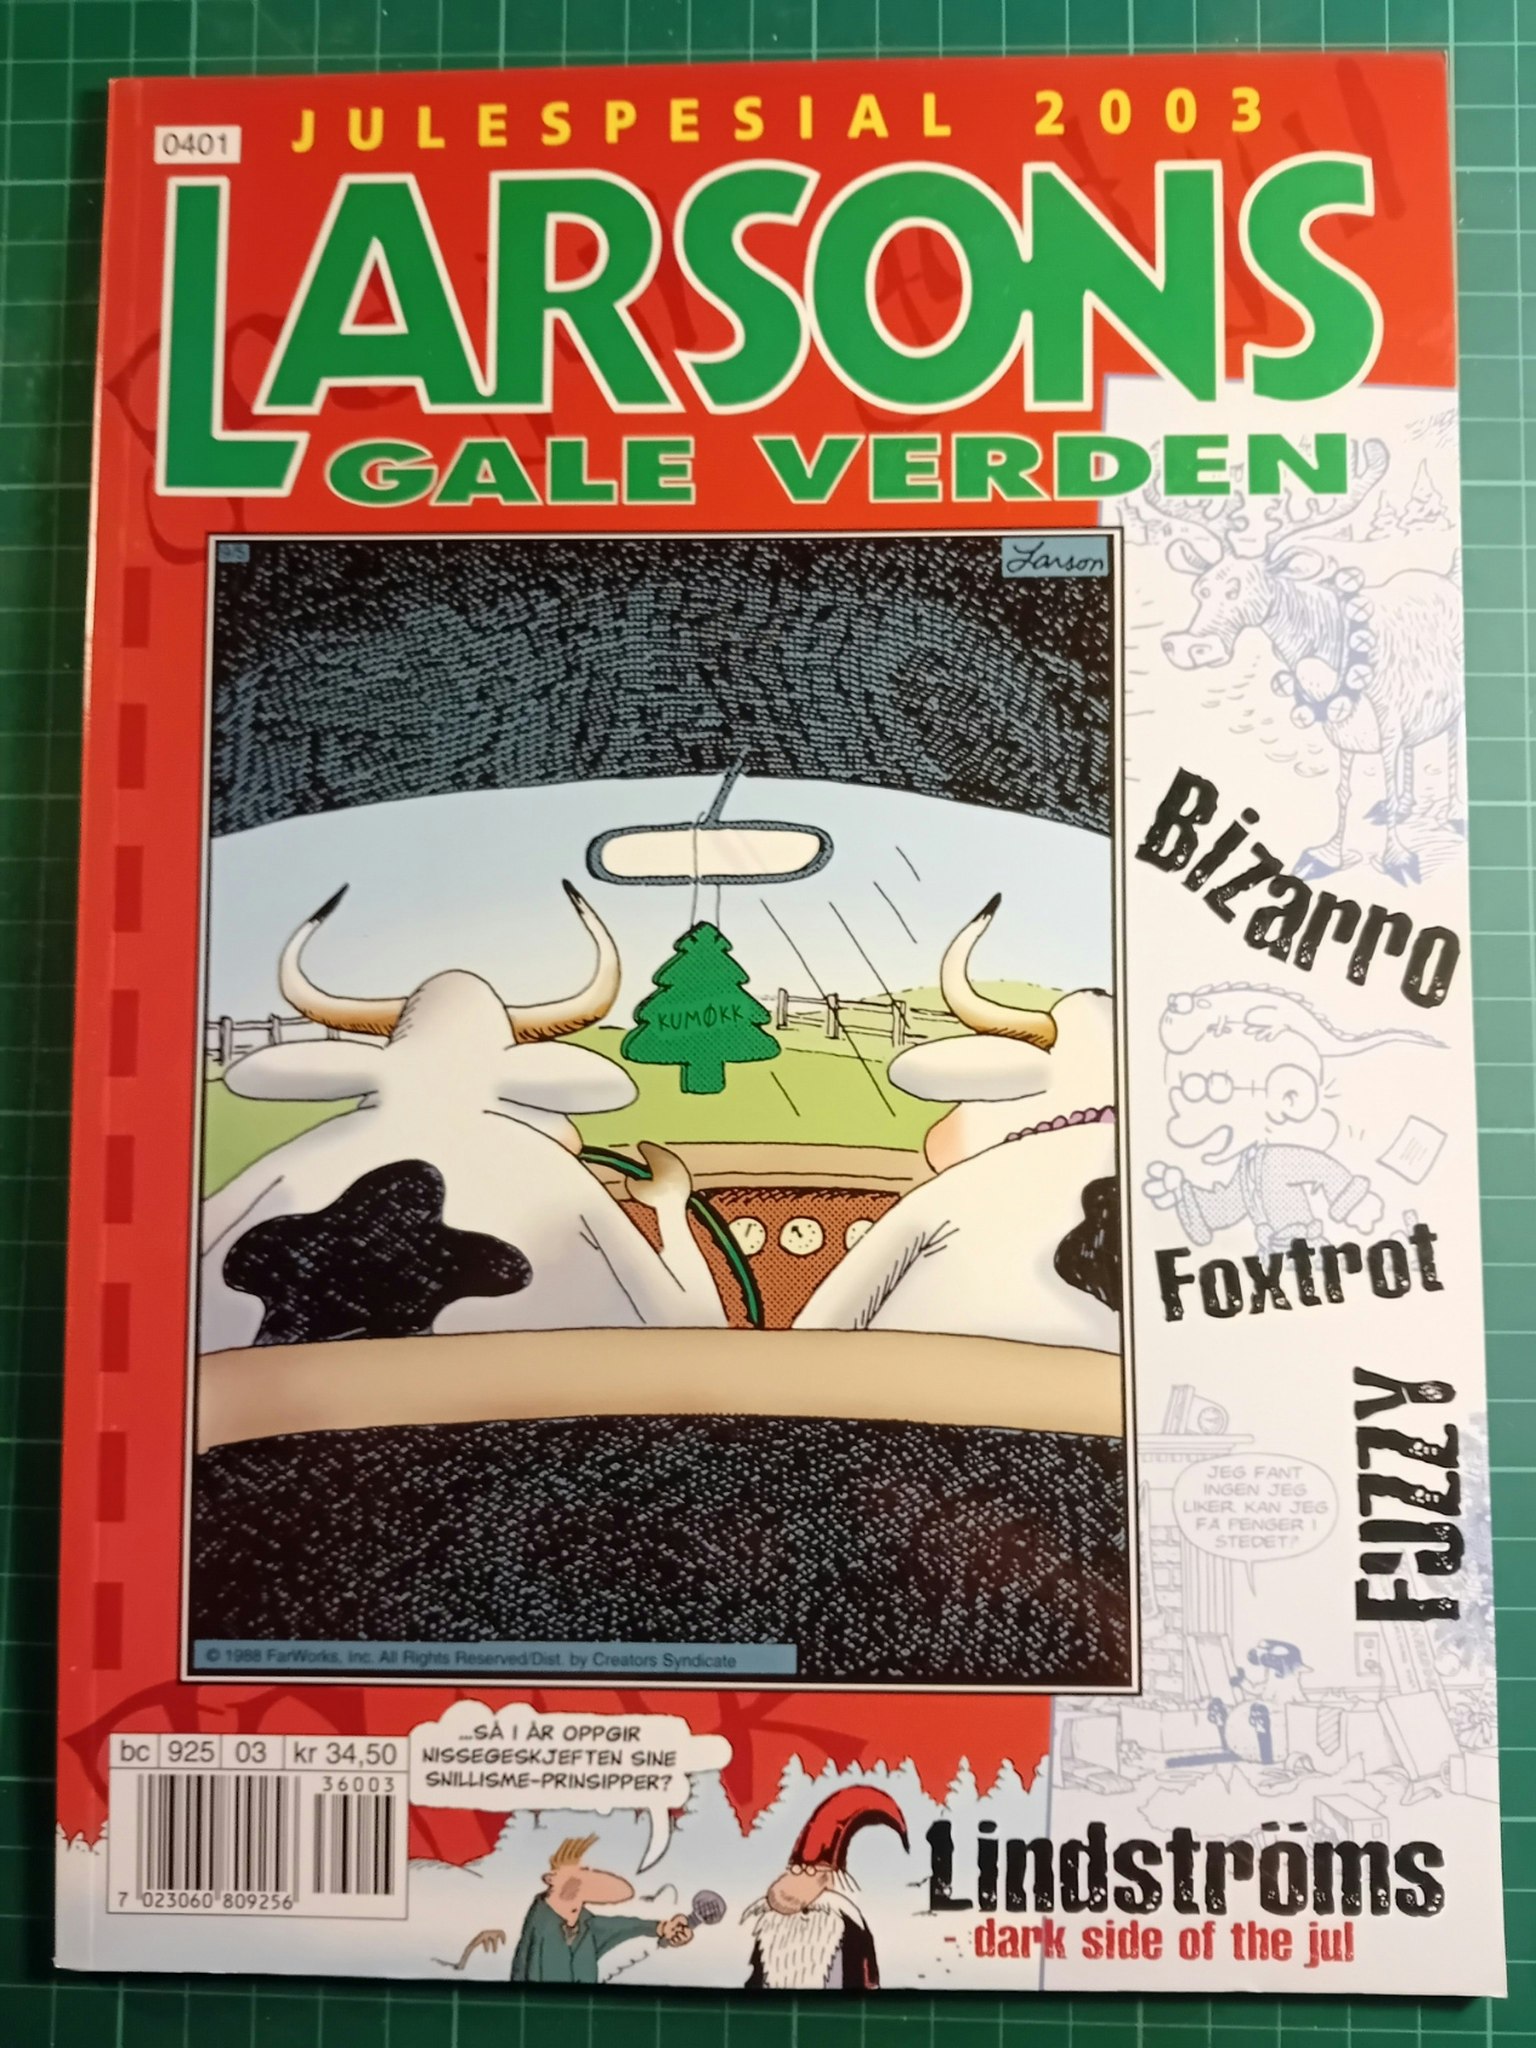 Larsons gale verden julen 2003